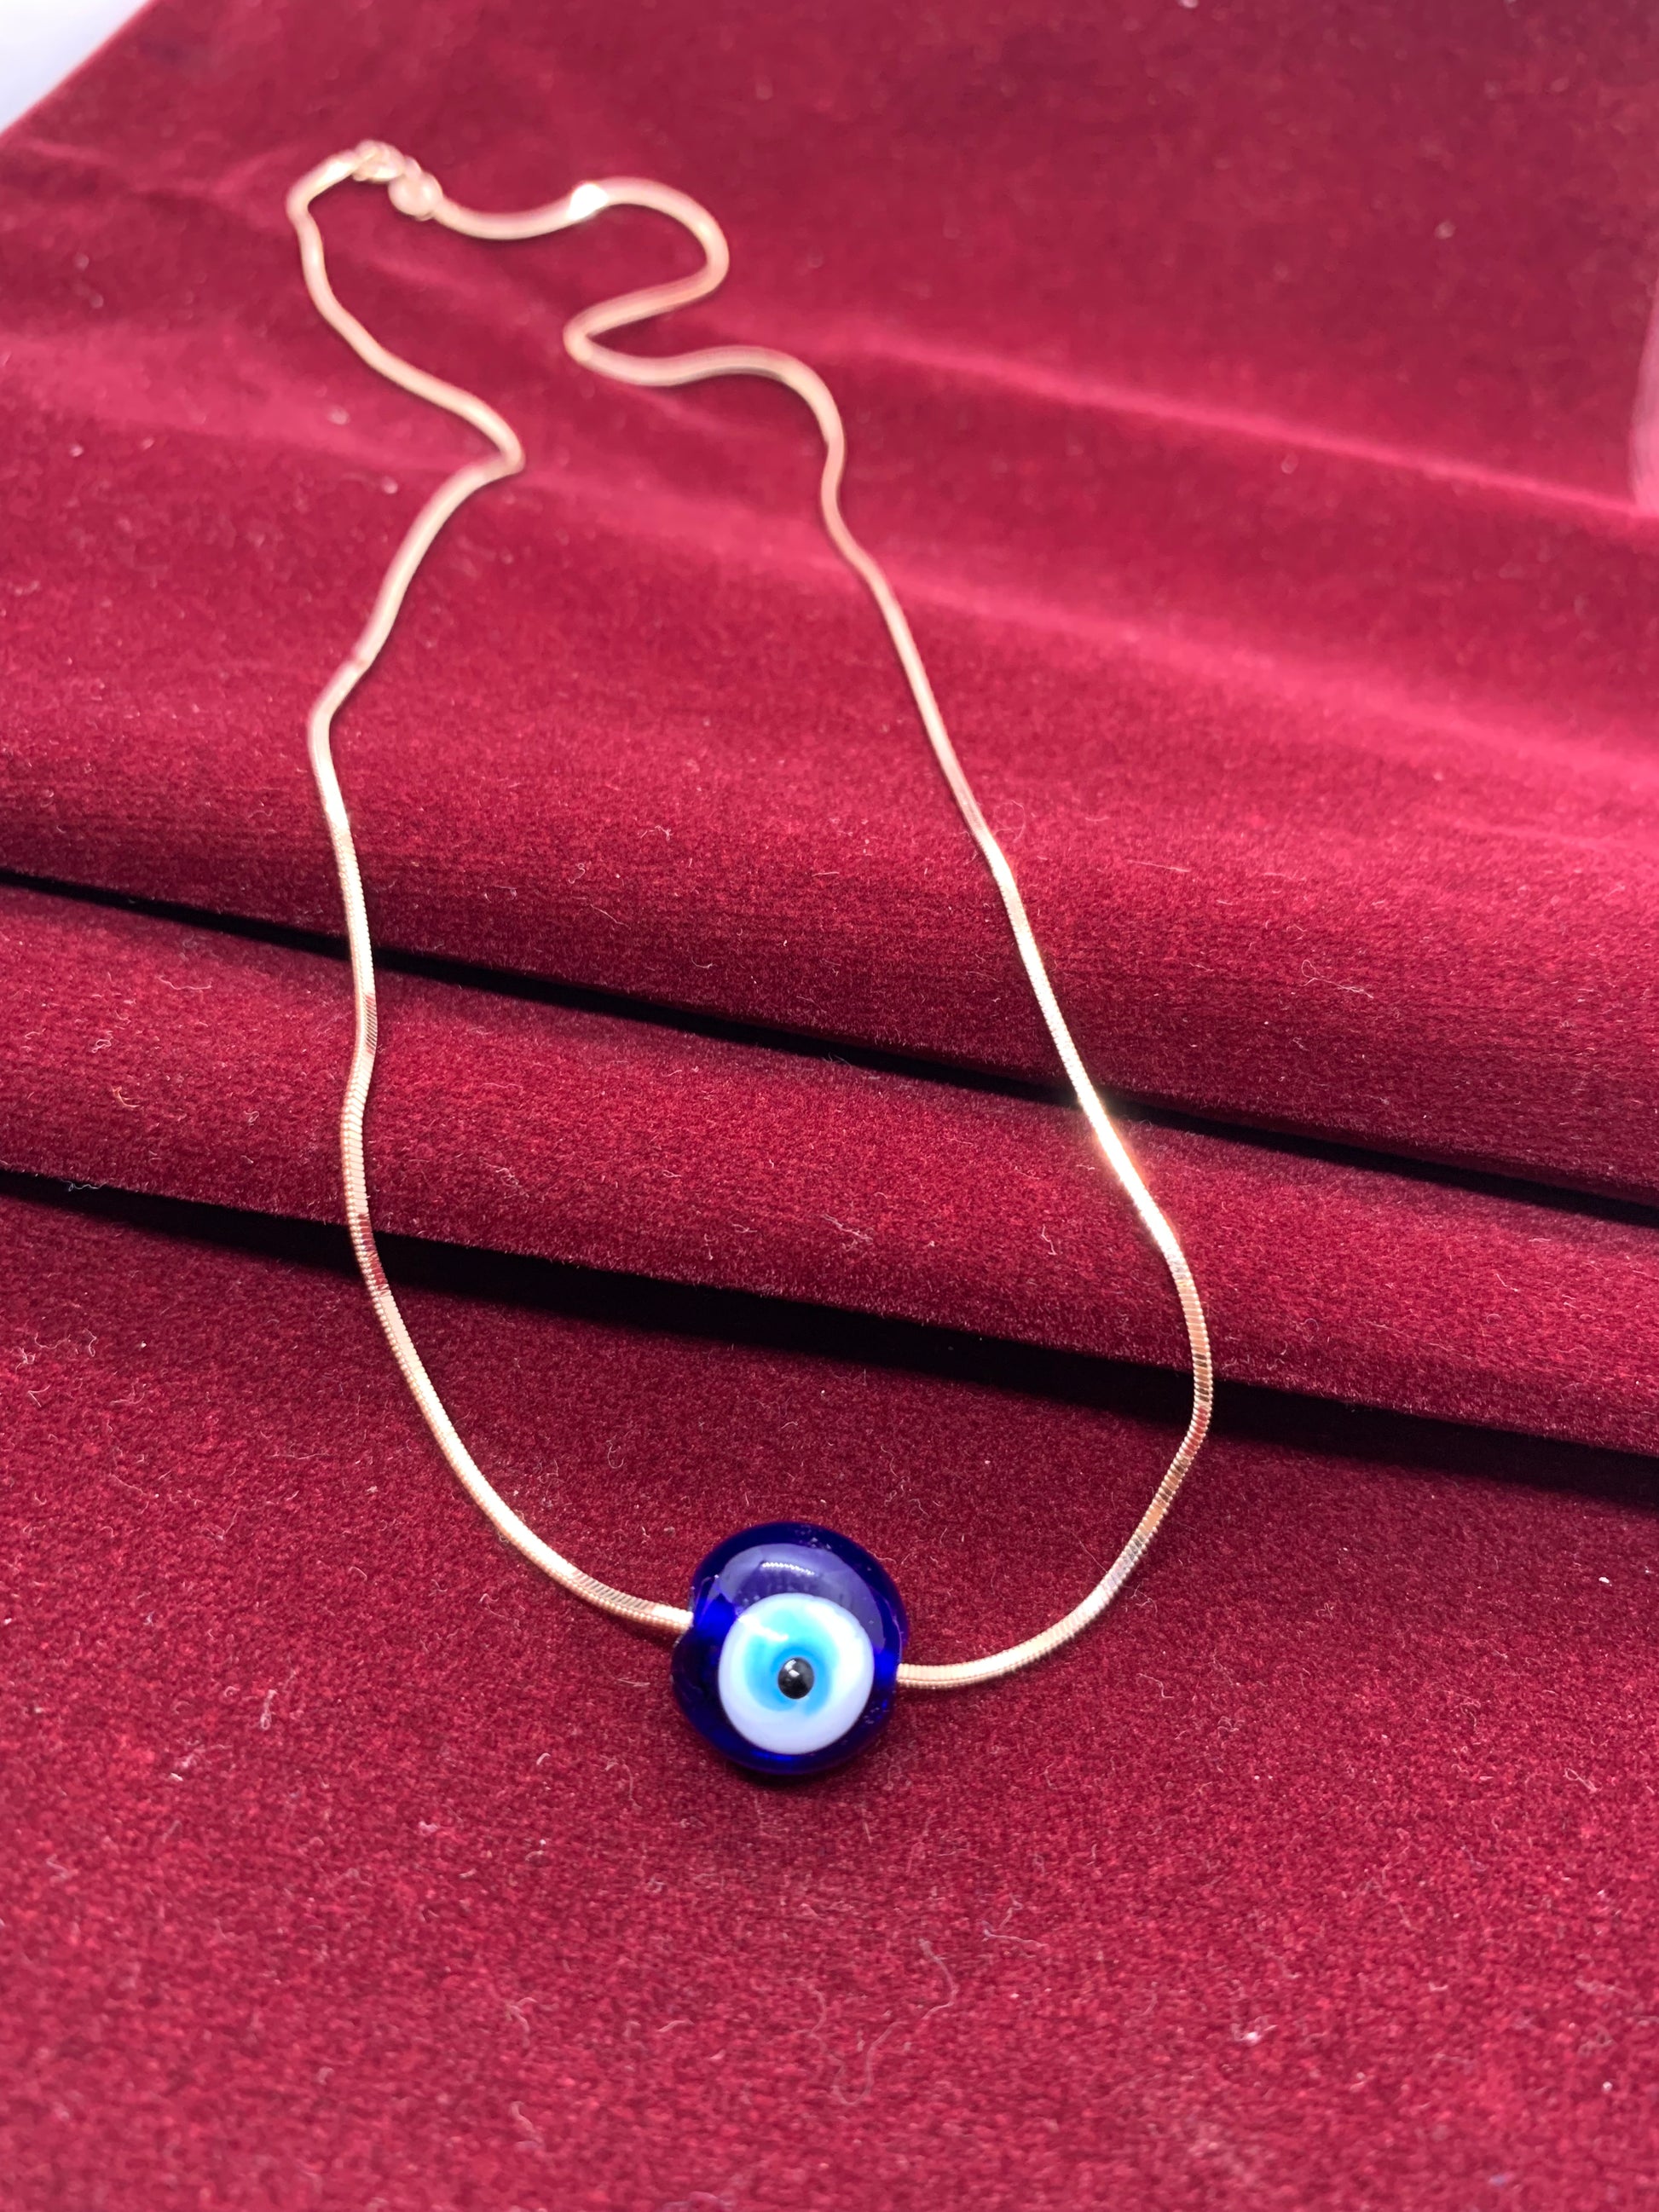 Stunning Evil Eye Necklace - Silver Jewelery 925